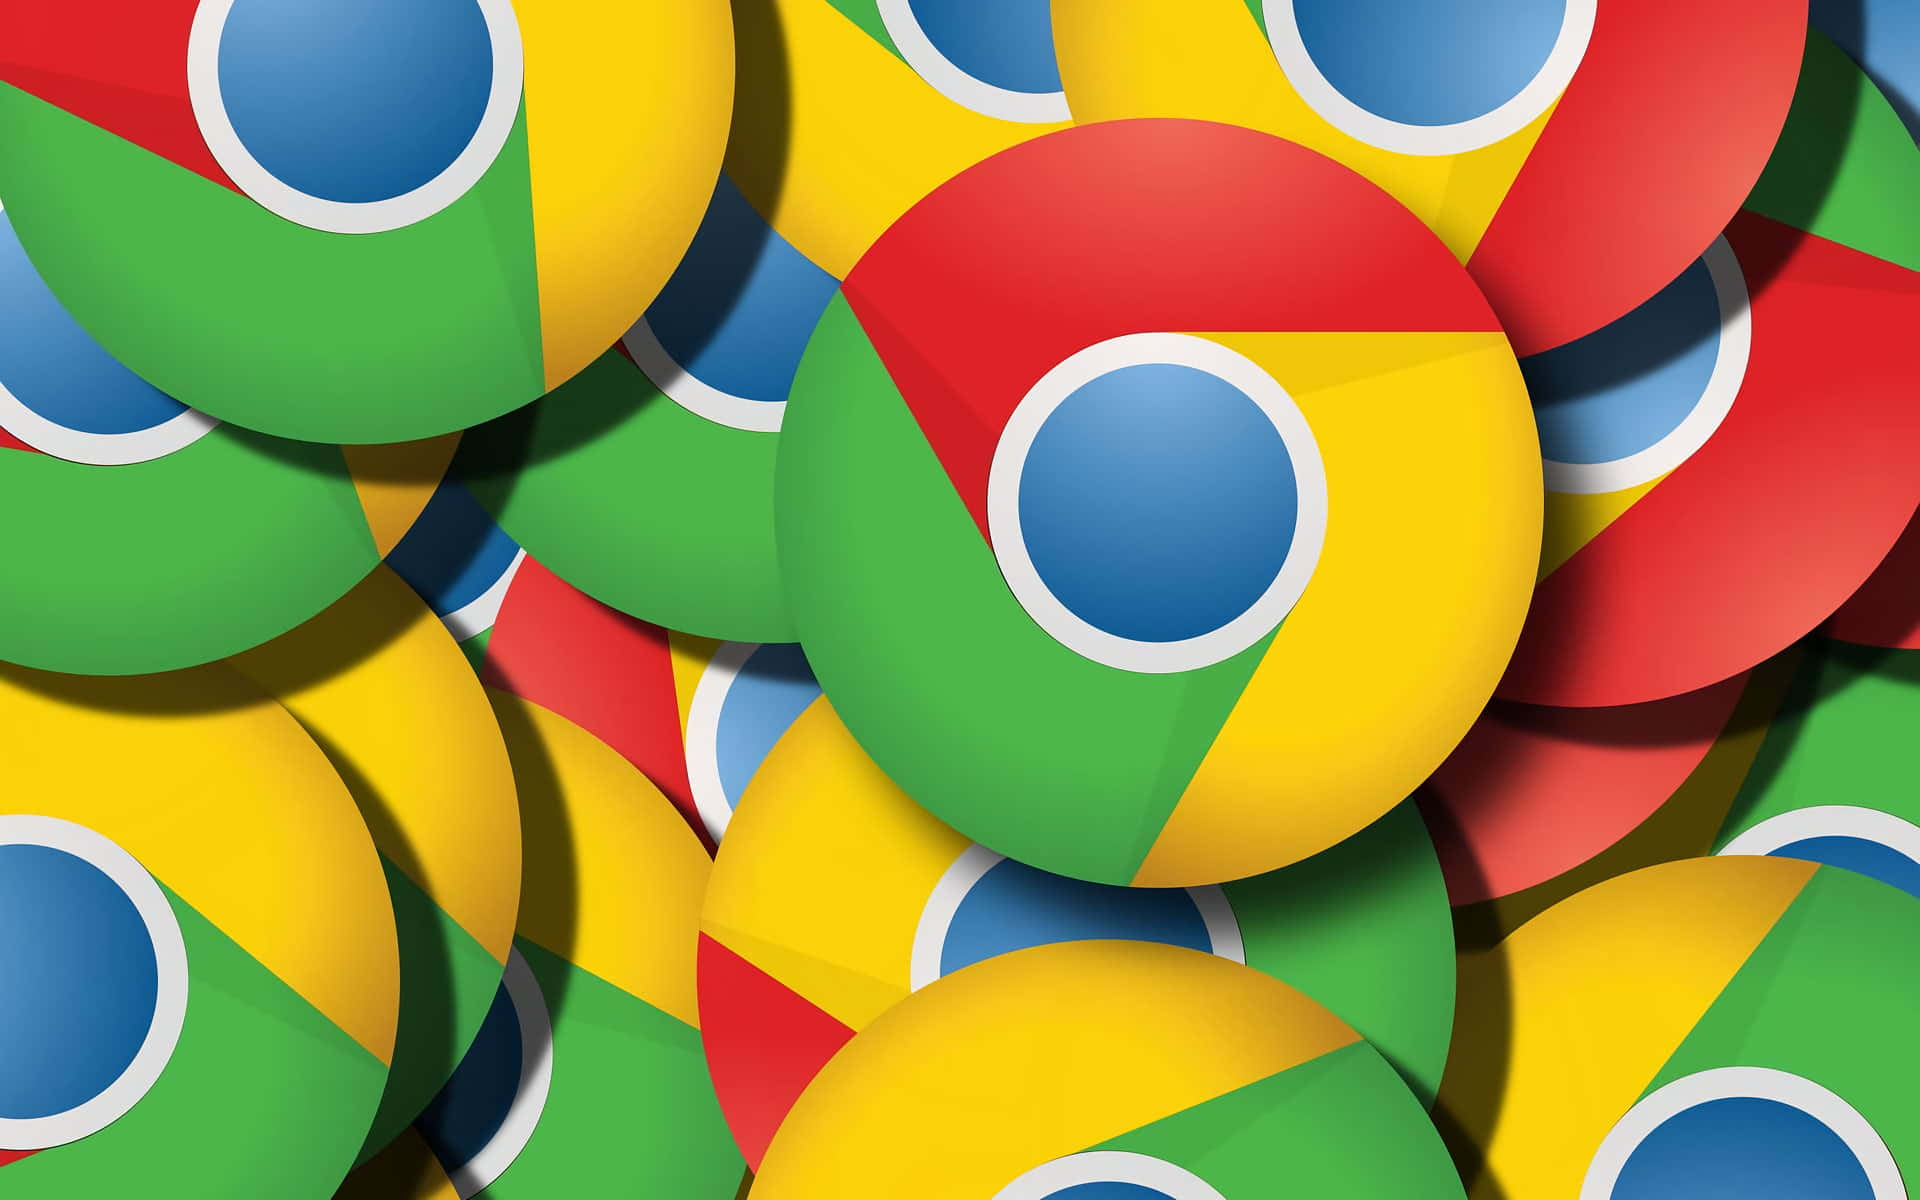 Chrome logo with Chrome Browserbackground